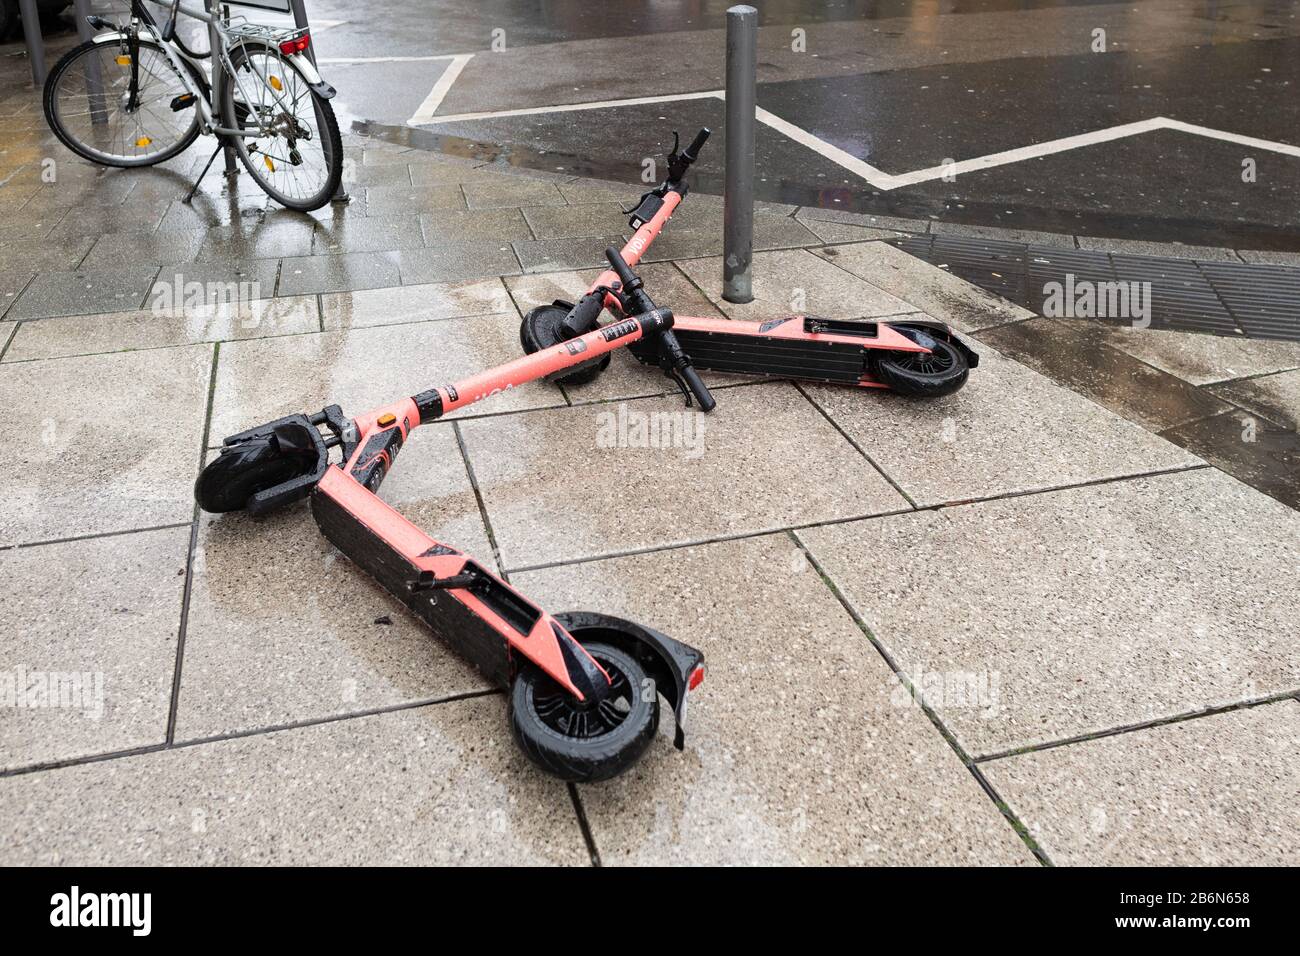 Voi e scooters dumped on Frankfurt street creating a trip hazard, Germany Stock Photo